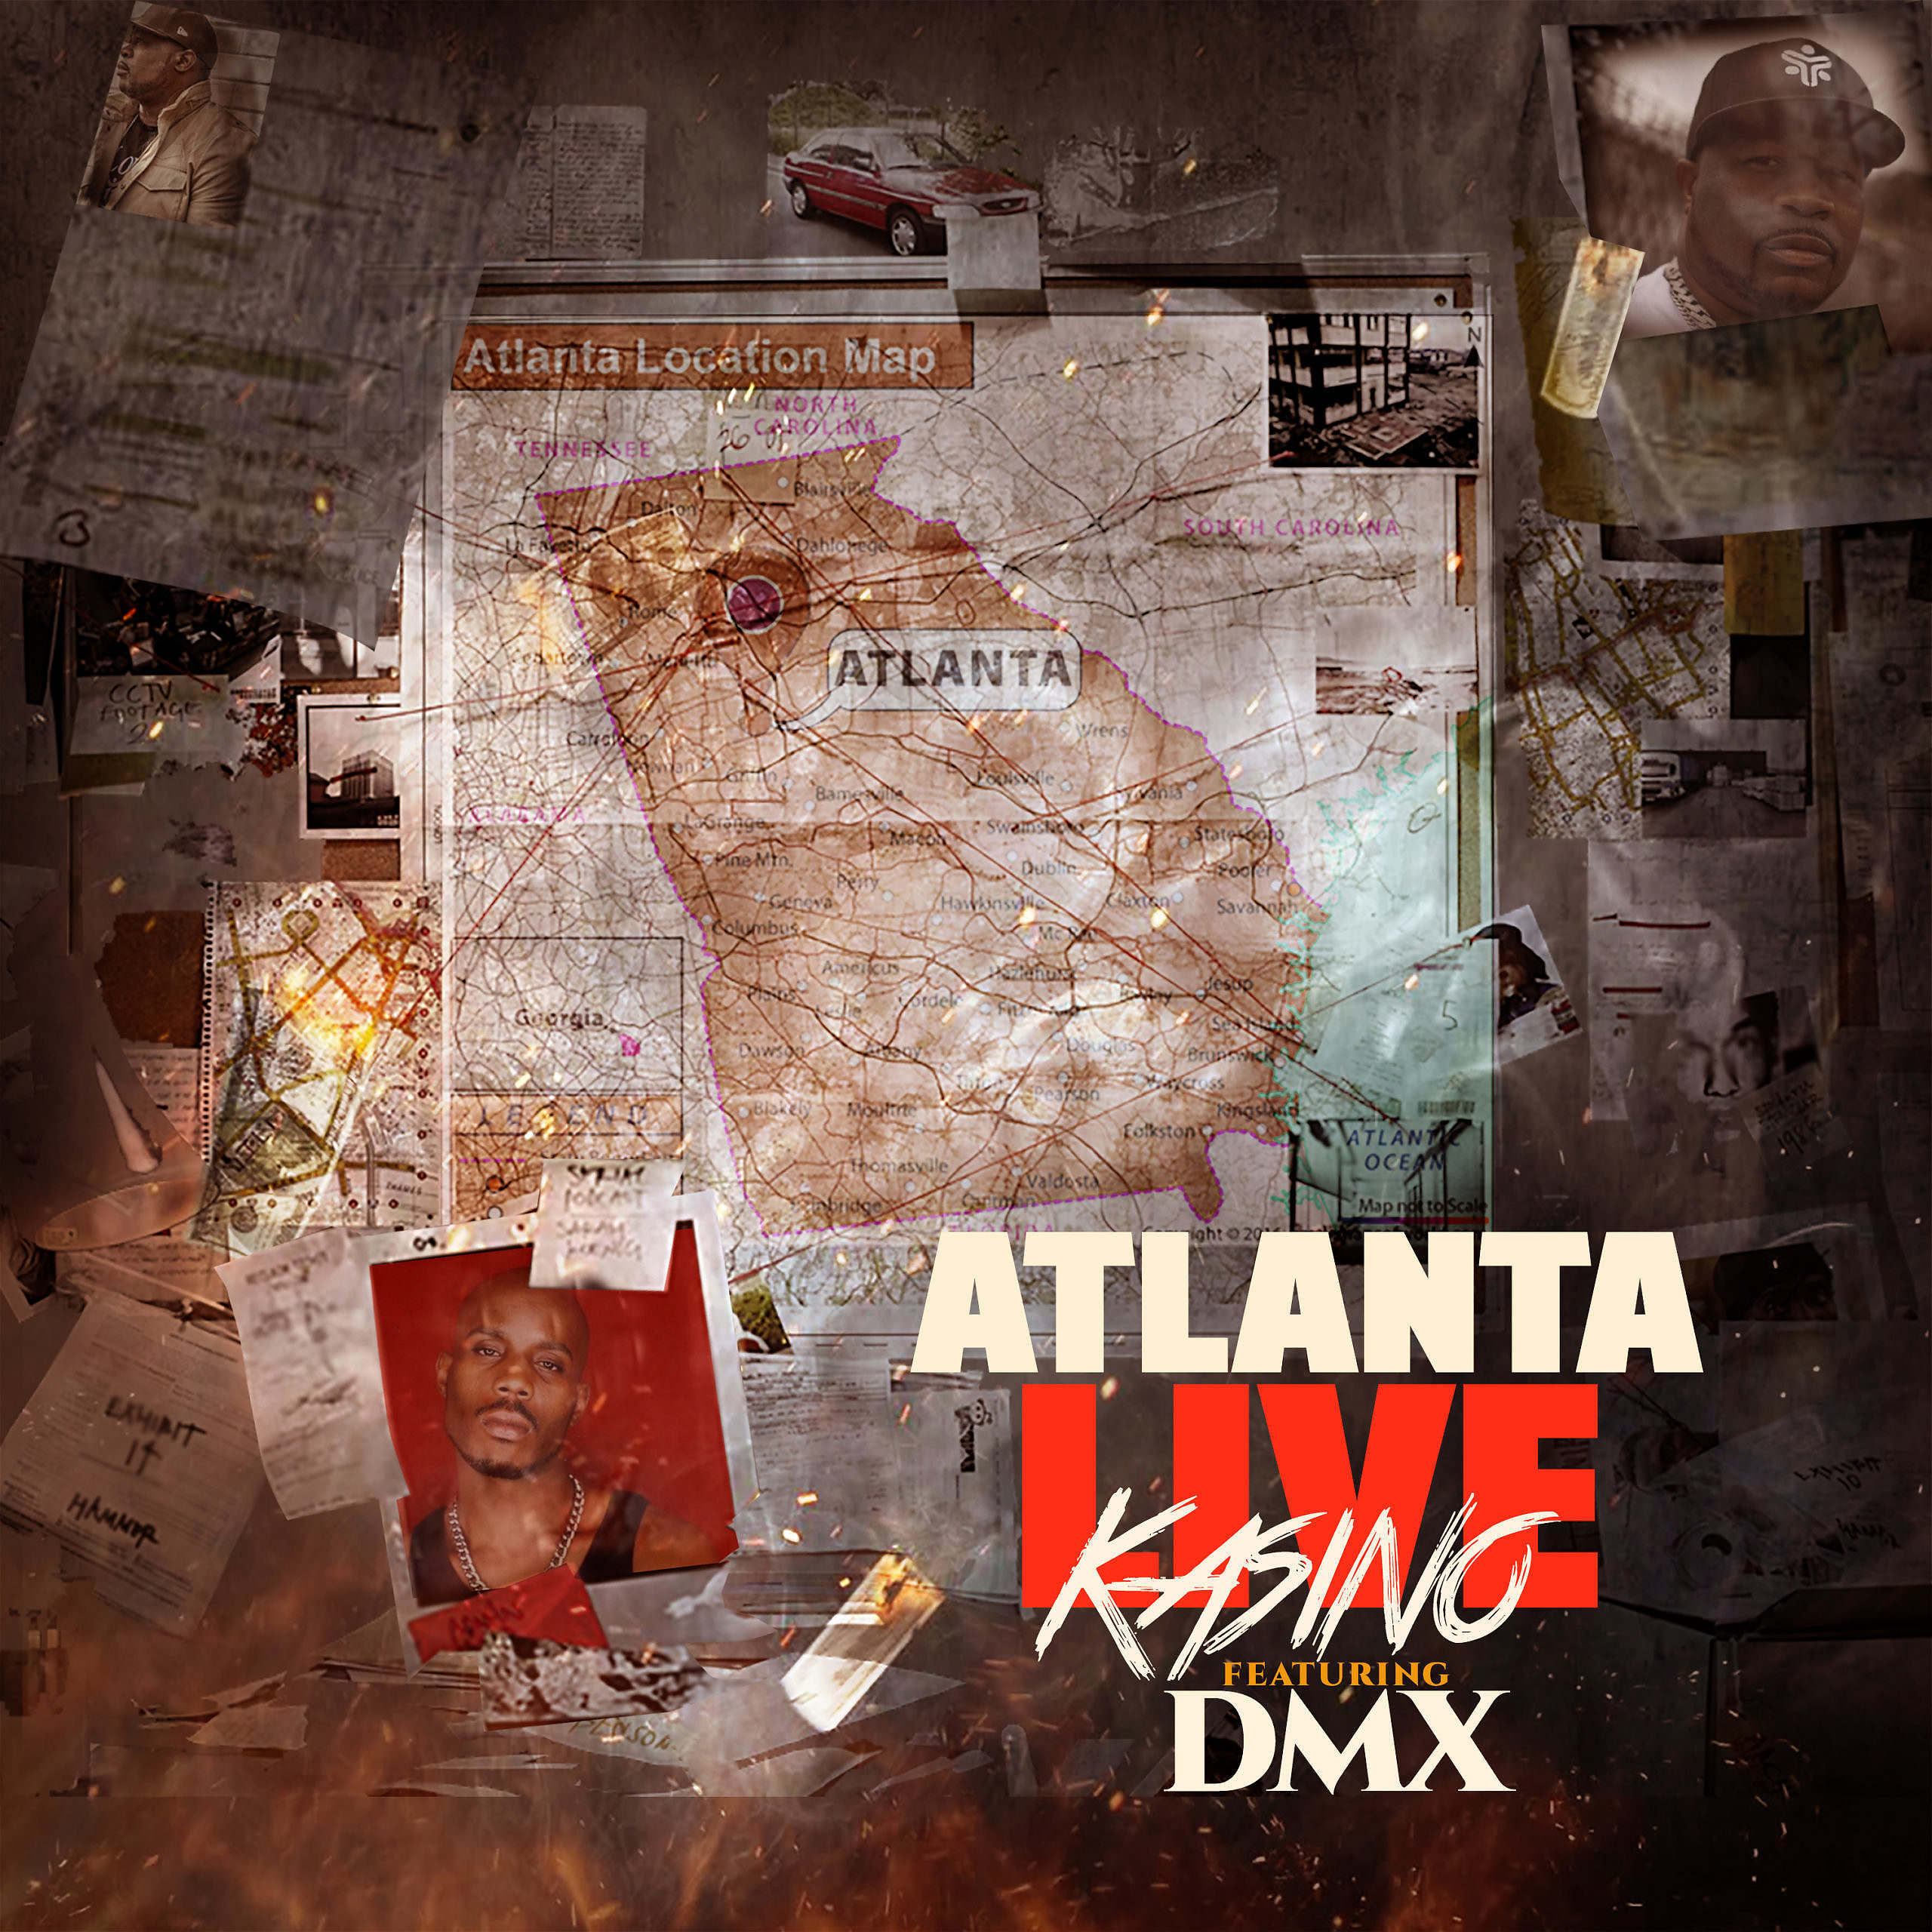 MP3: Kasino feat. DMX - Atlanta (Live) [Prod. Dame Grease]